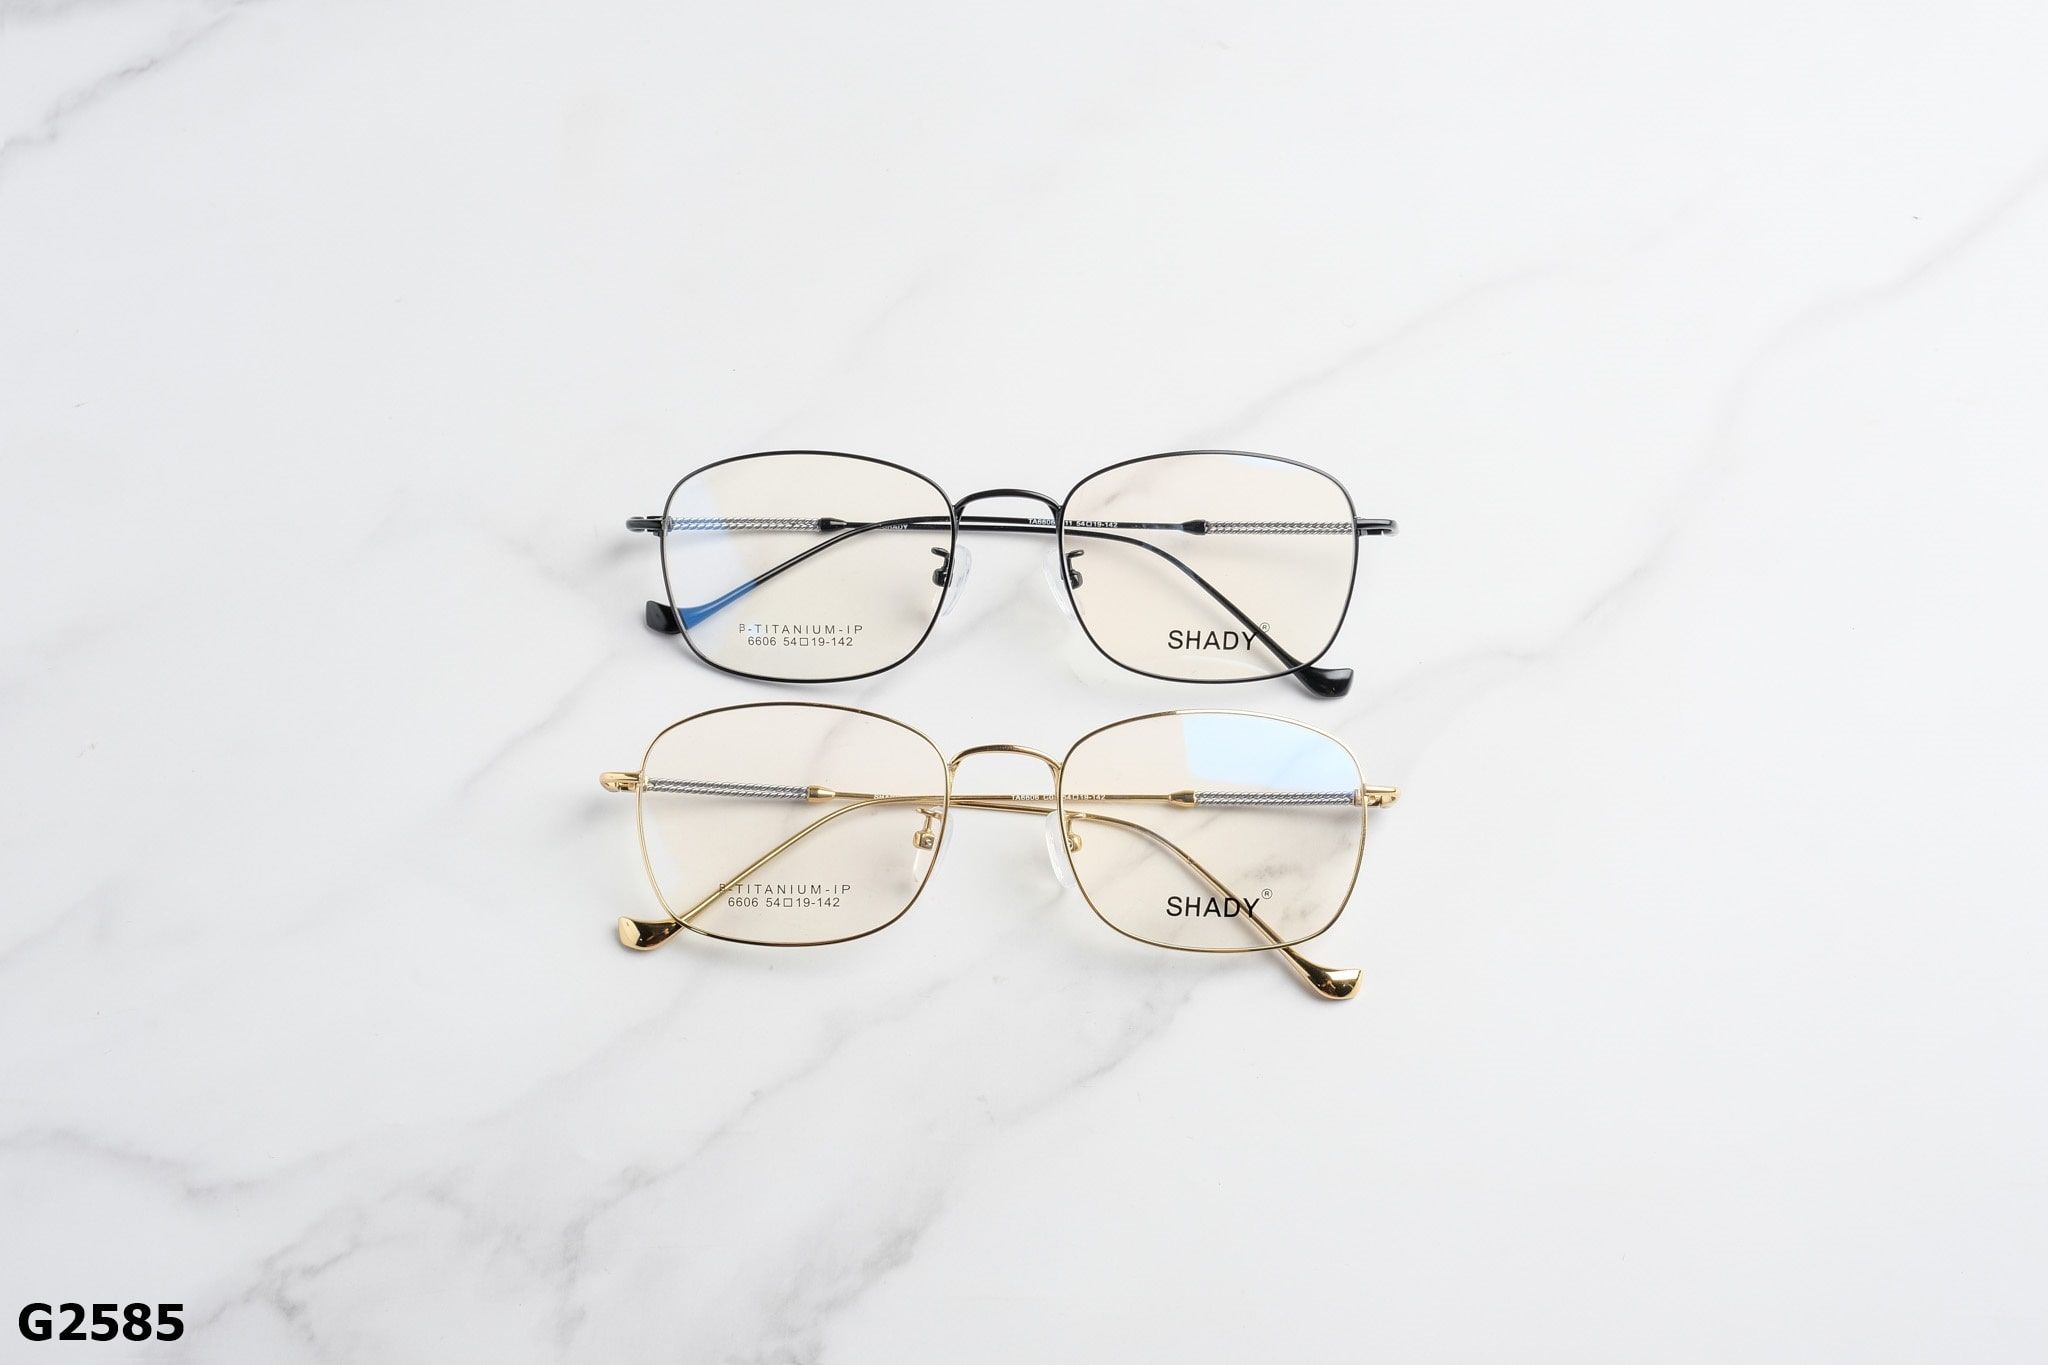  SHADY Eyewear - Glasses - G2585 